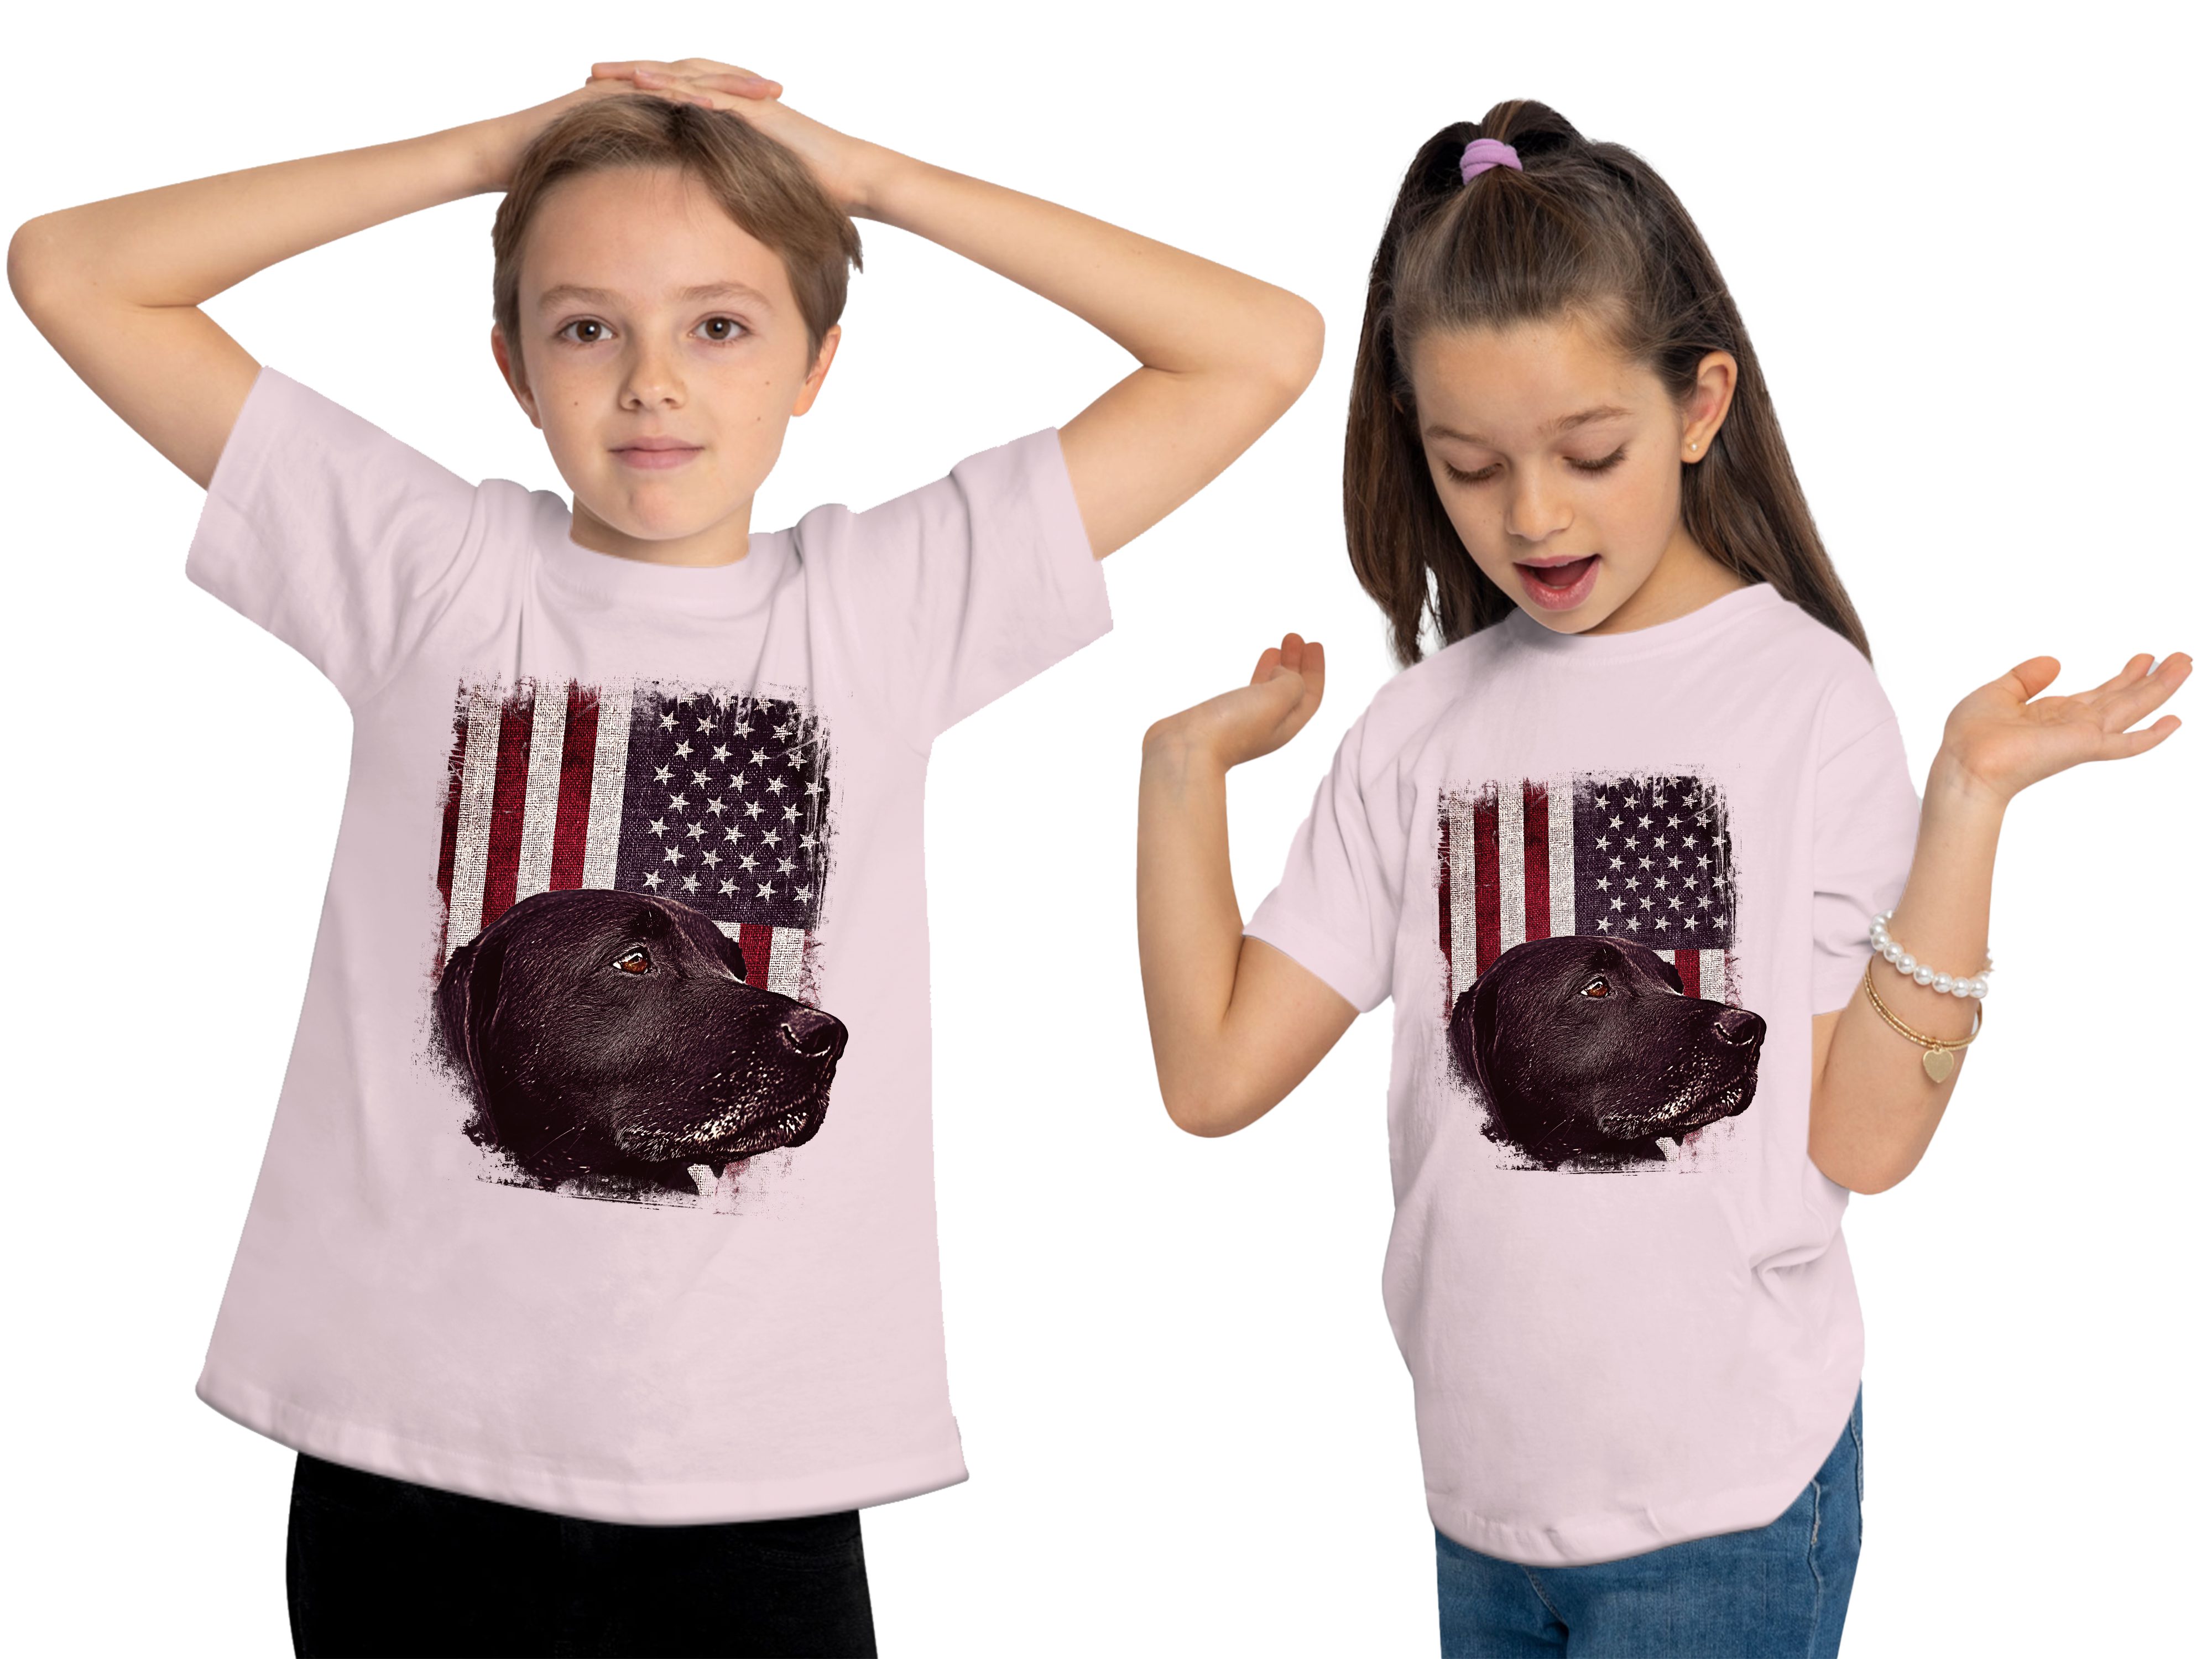 Labrador vor T-Shirt i246 - Hunde bedruckt USA MyDesign24 mit schwarzer Kinder Shirt rosa Print Aufdruck, Flagge Baumwollshirt